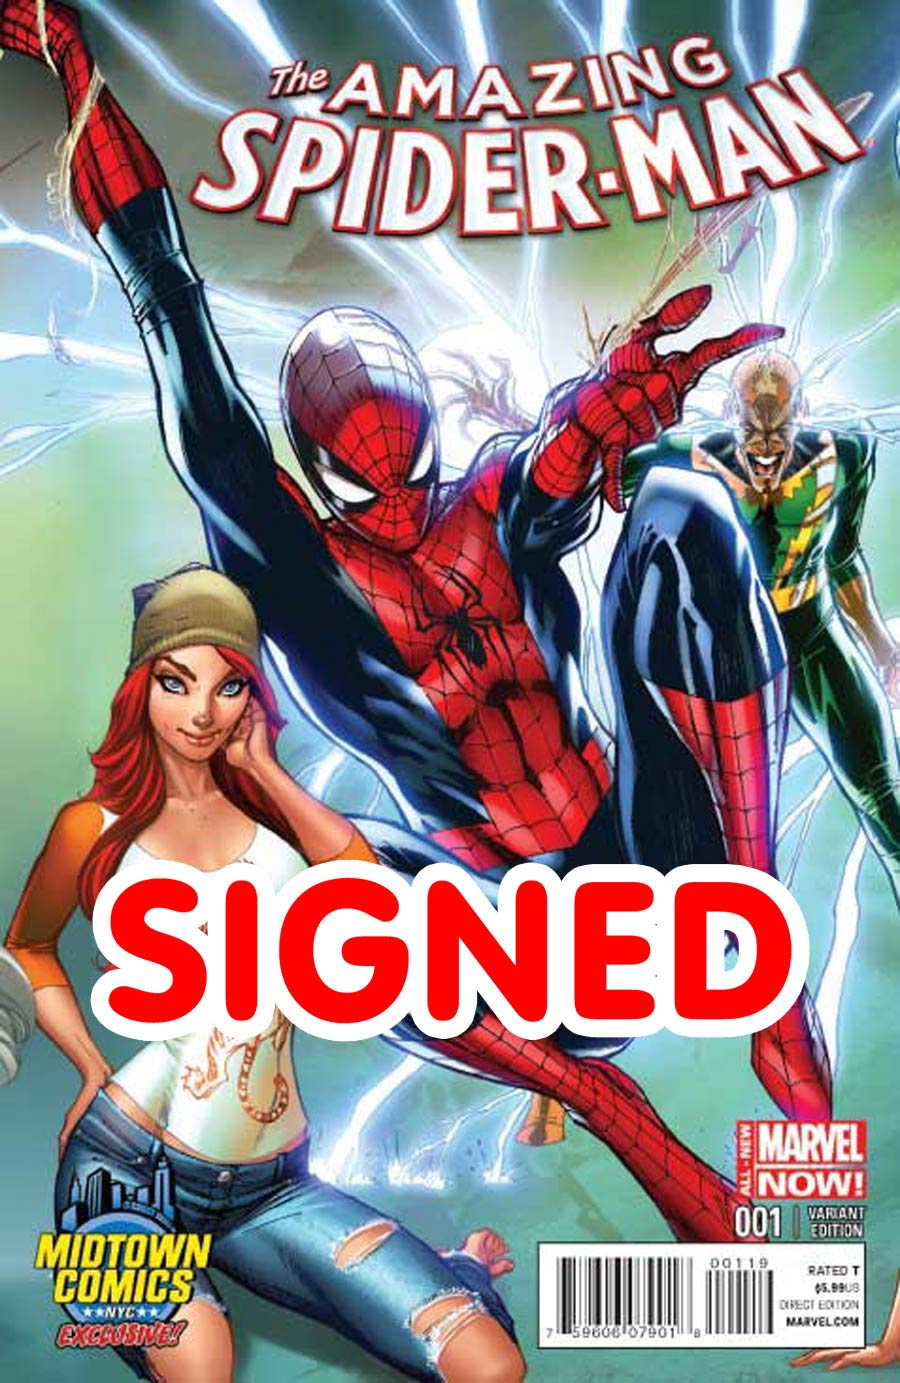 Amazing Spider-Man vol 1 # 700.3 Marvel NM Marvel 1st Print